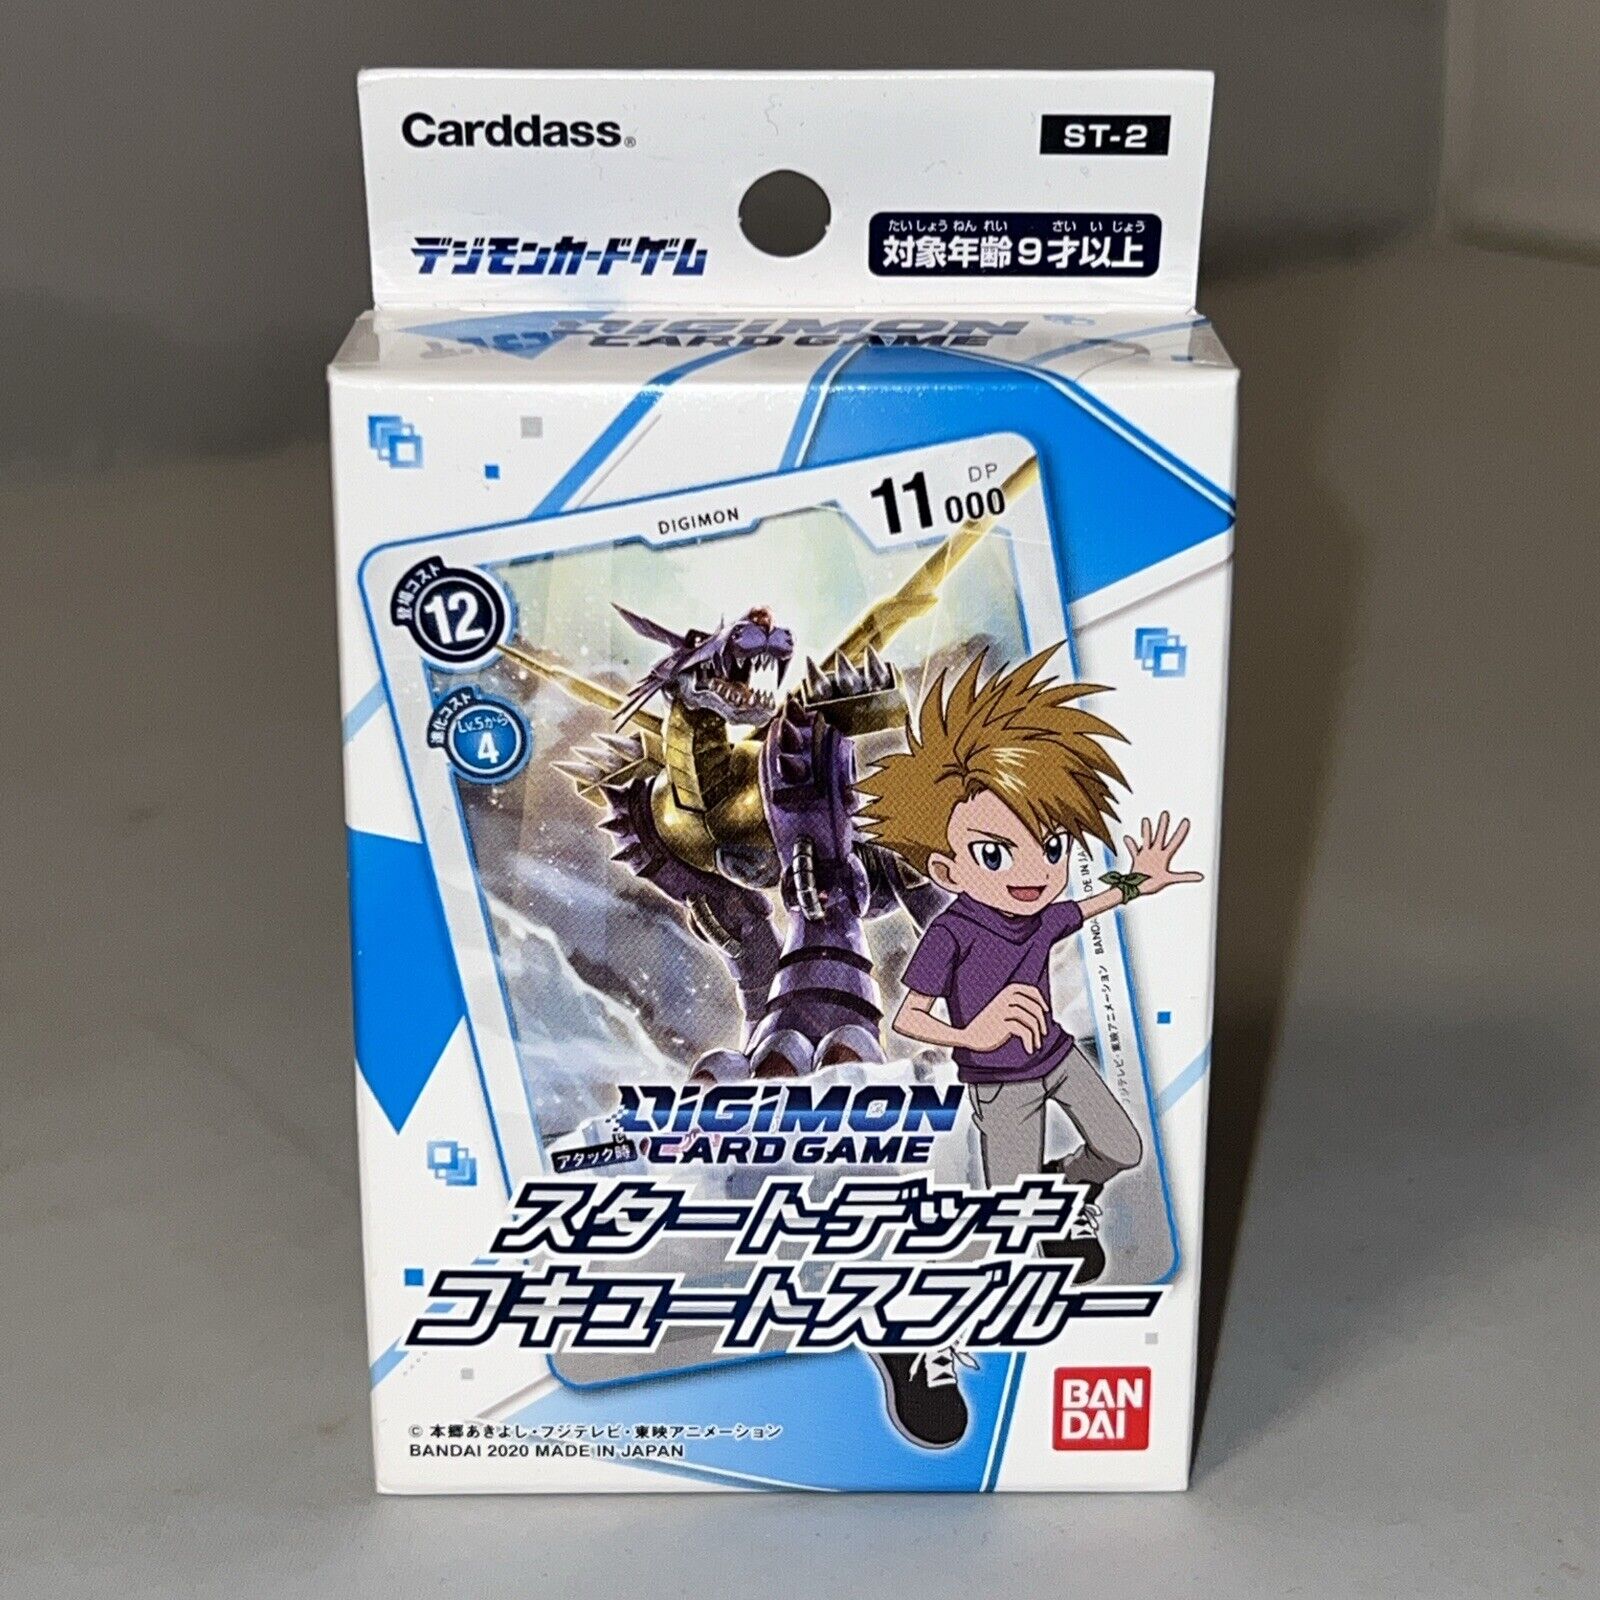 Bandai Digimon Card Game Starter Deck - Cocutes Blue [ST-2] - Japan